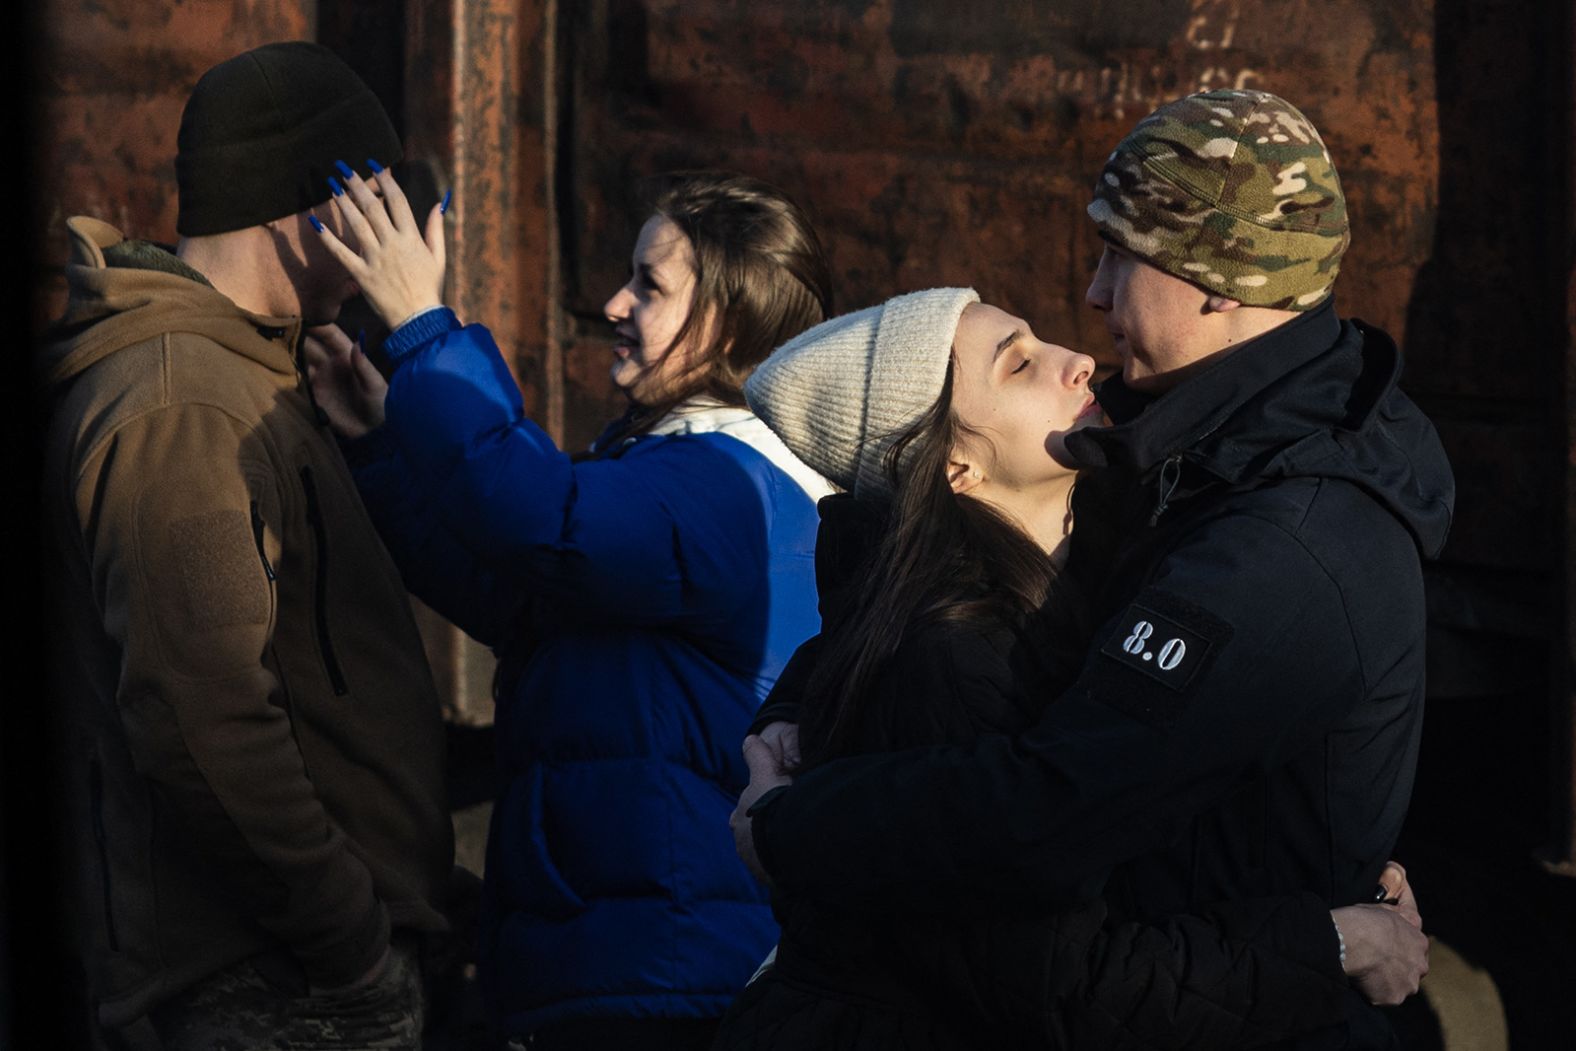 Ukrainian servicemen bid farewell to their partners at the Kramatorsk train station in eastern Ukraine on Tuesday, January 3.